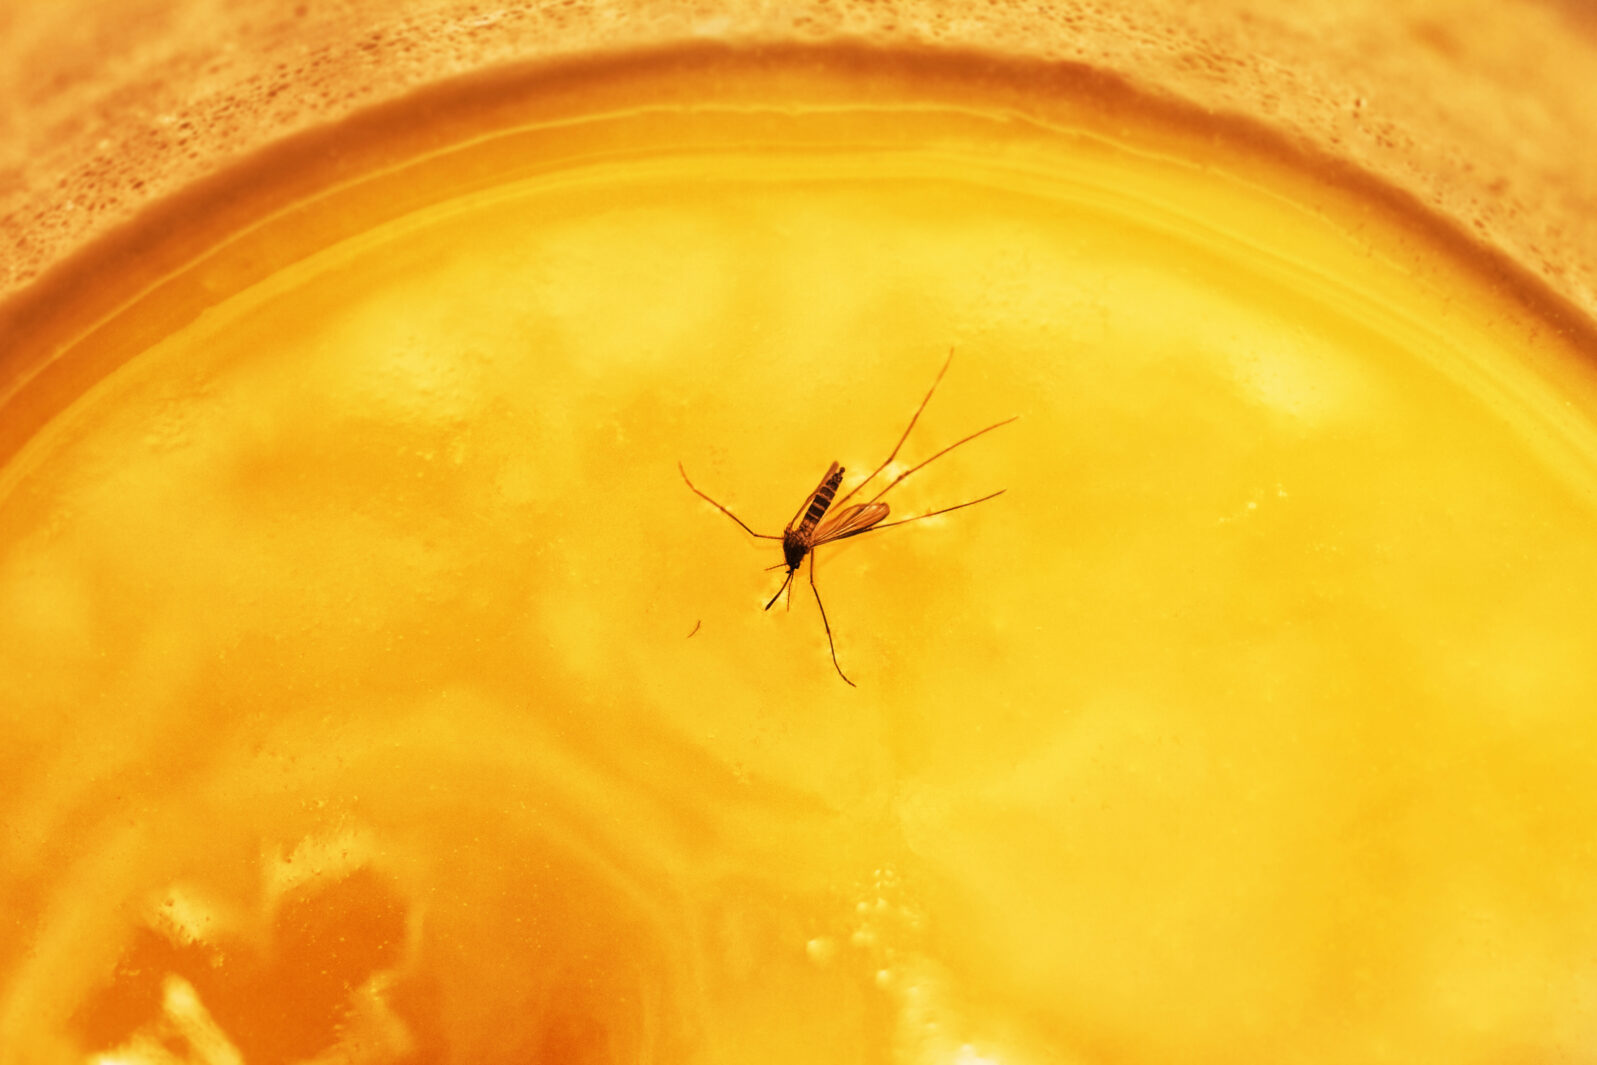 Mosquito stuck in honey